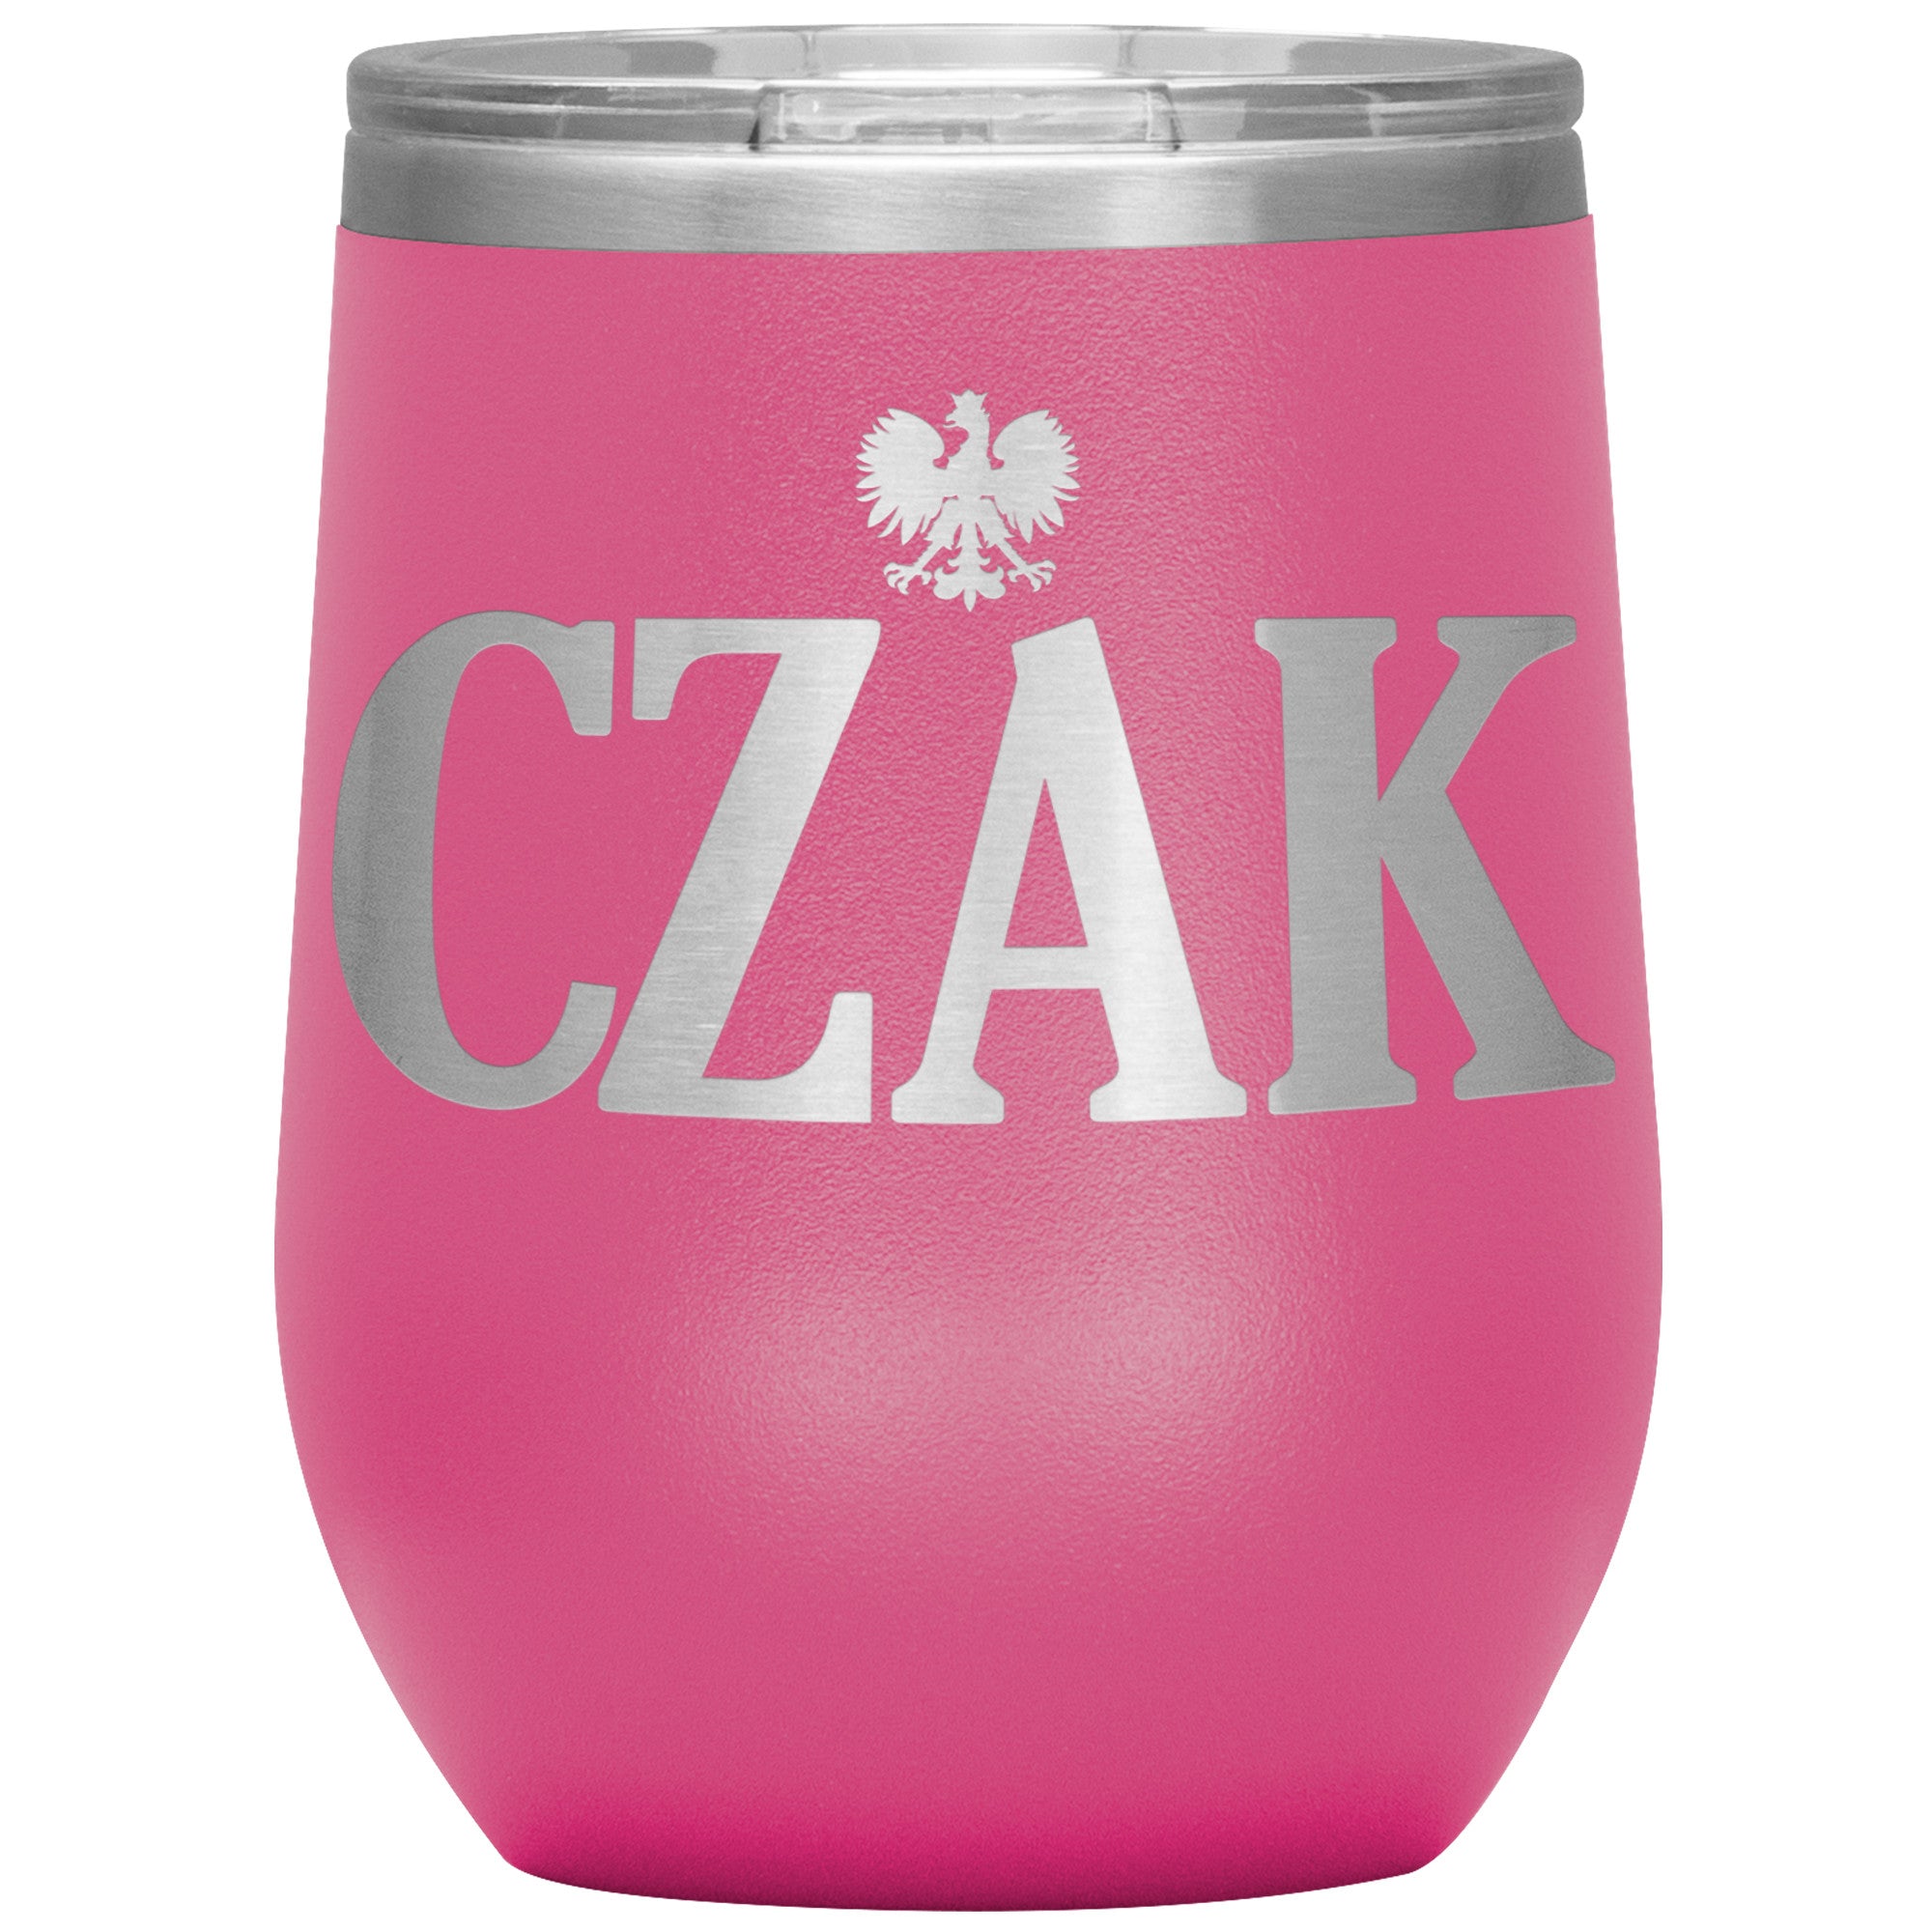 Polish Surnames Ending In CZAK Insulated Wine Tumbler Tumblers teelaunch Pink  